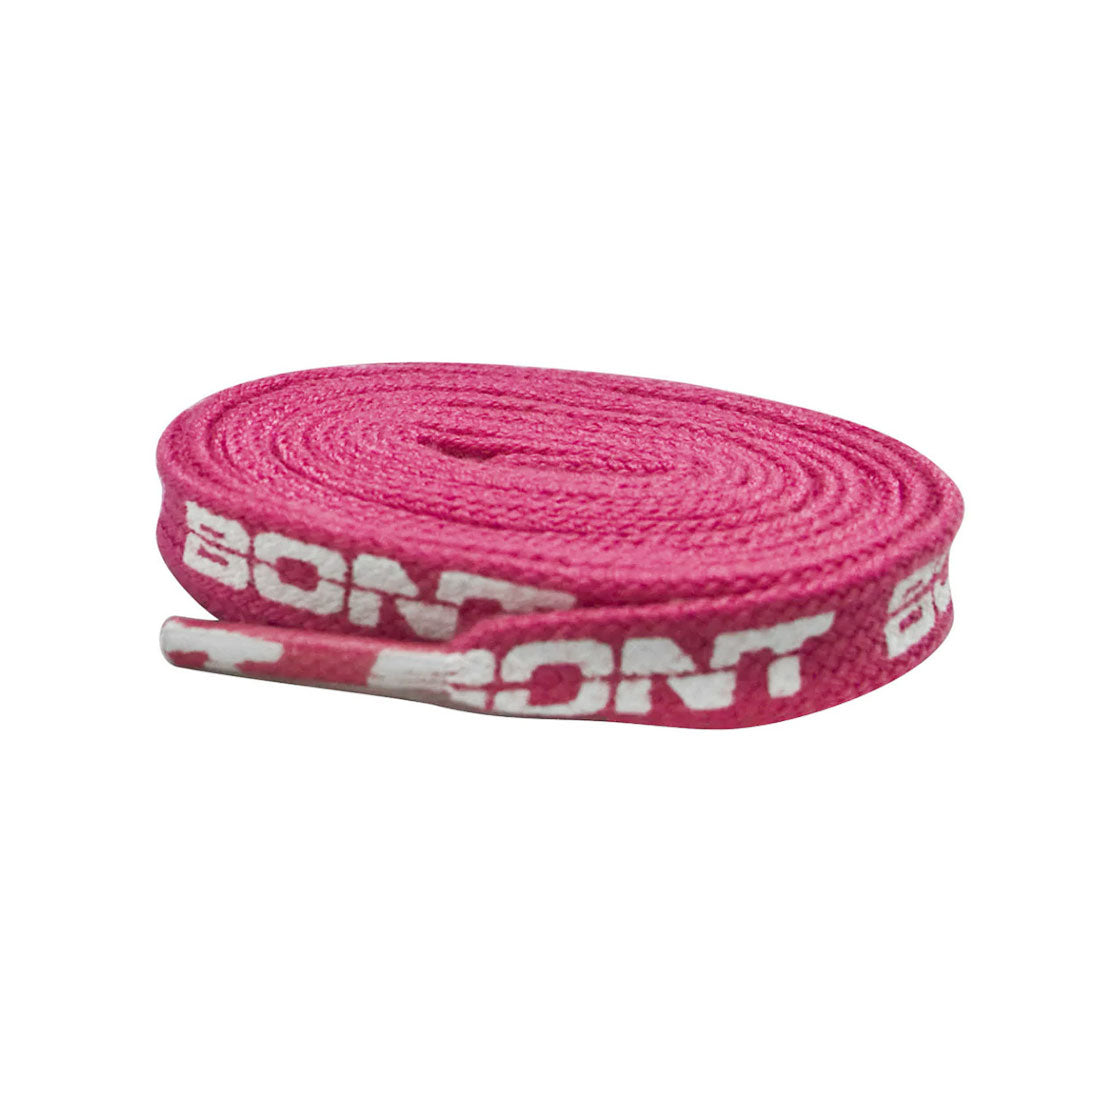 BONT Skate 10mm Laces - 150cm / 59in - Pink Laces